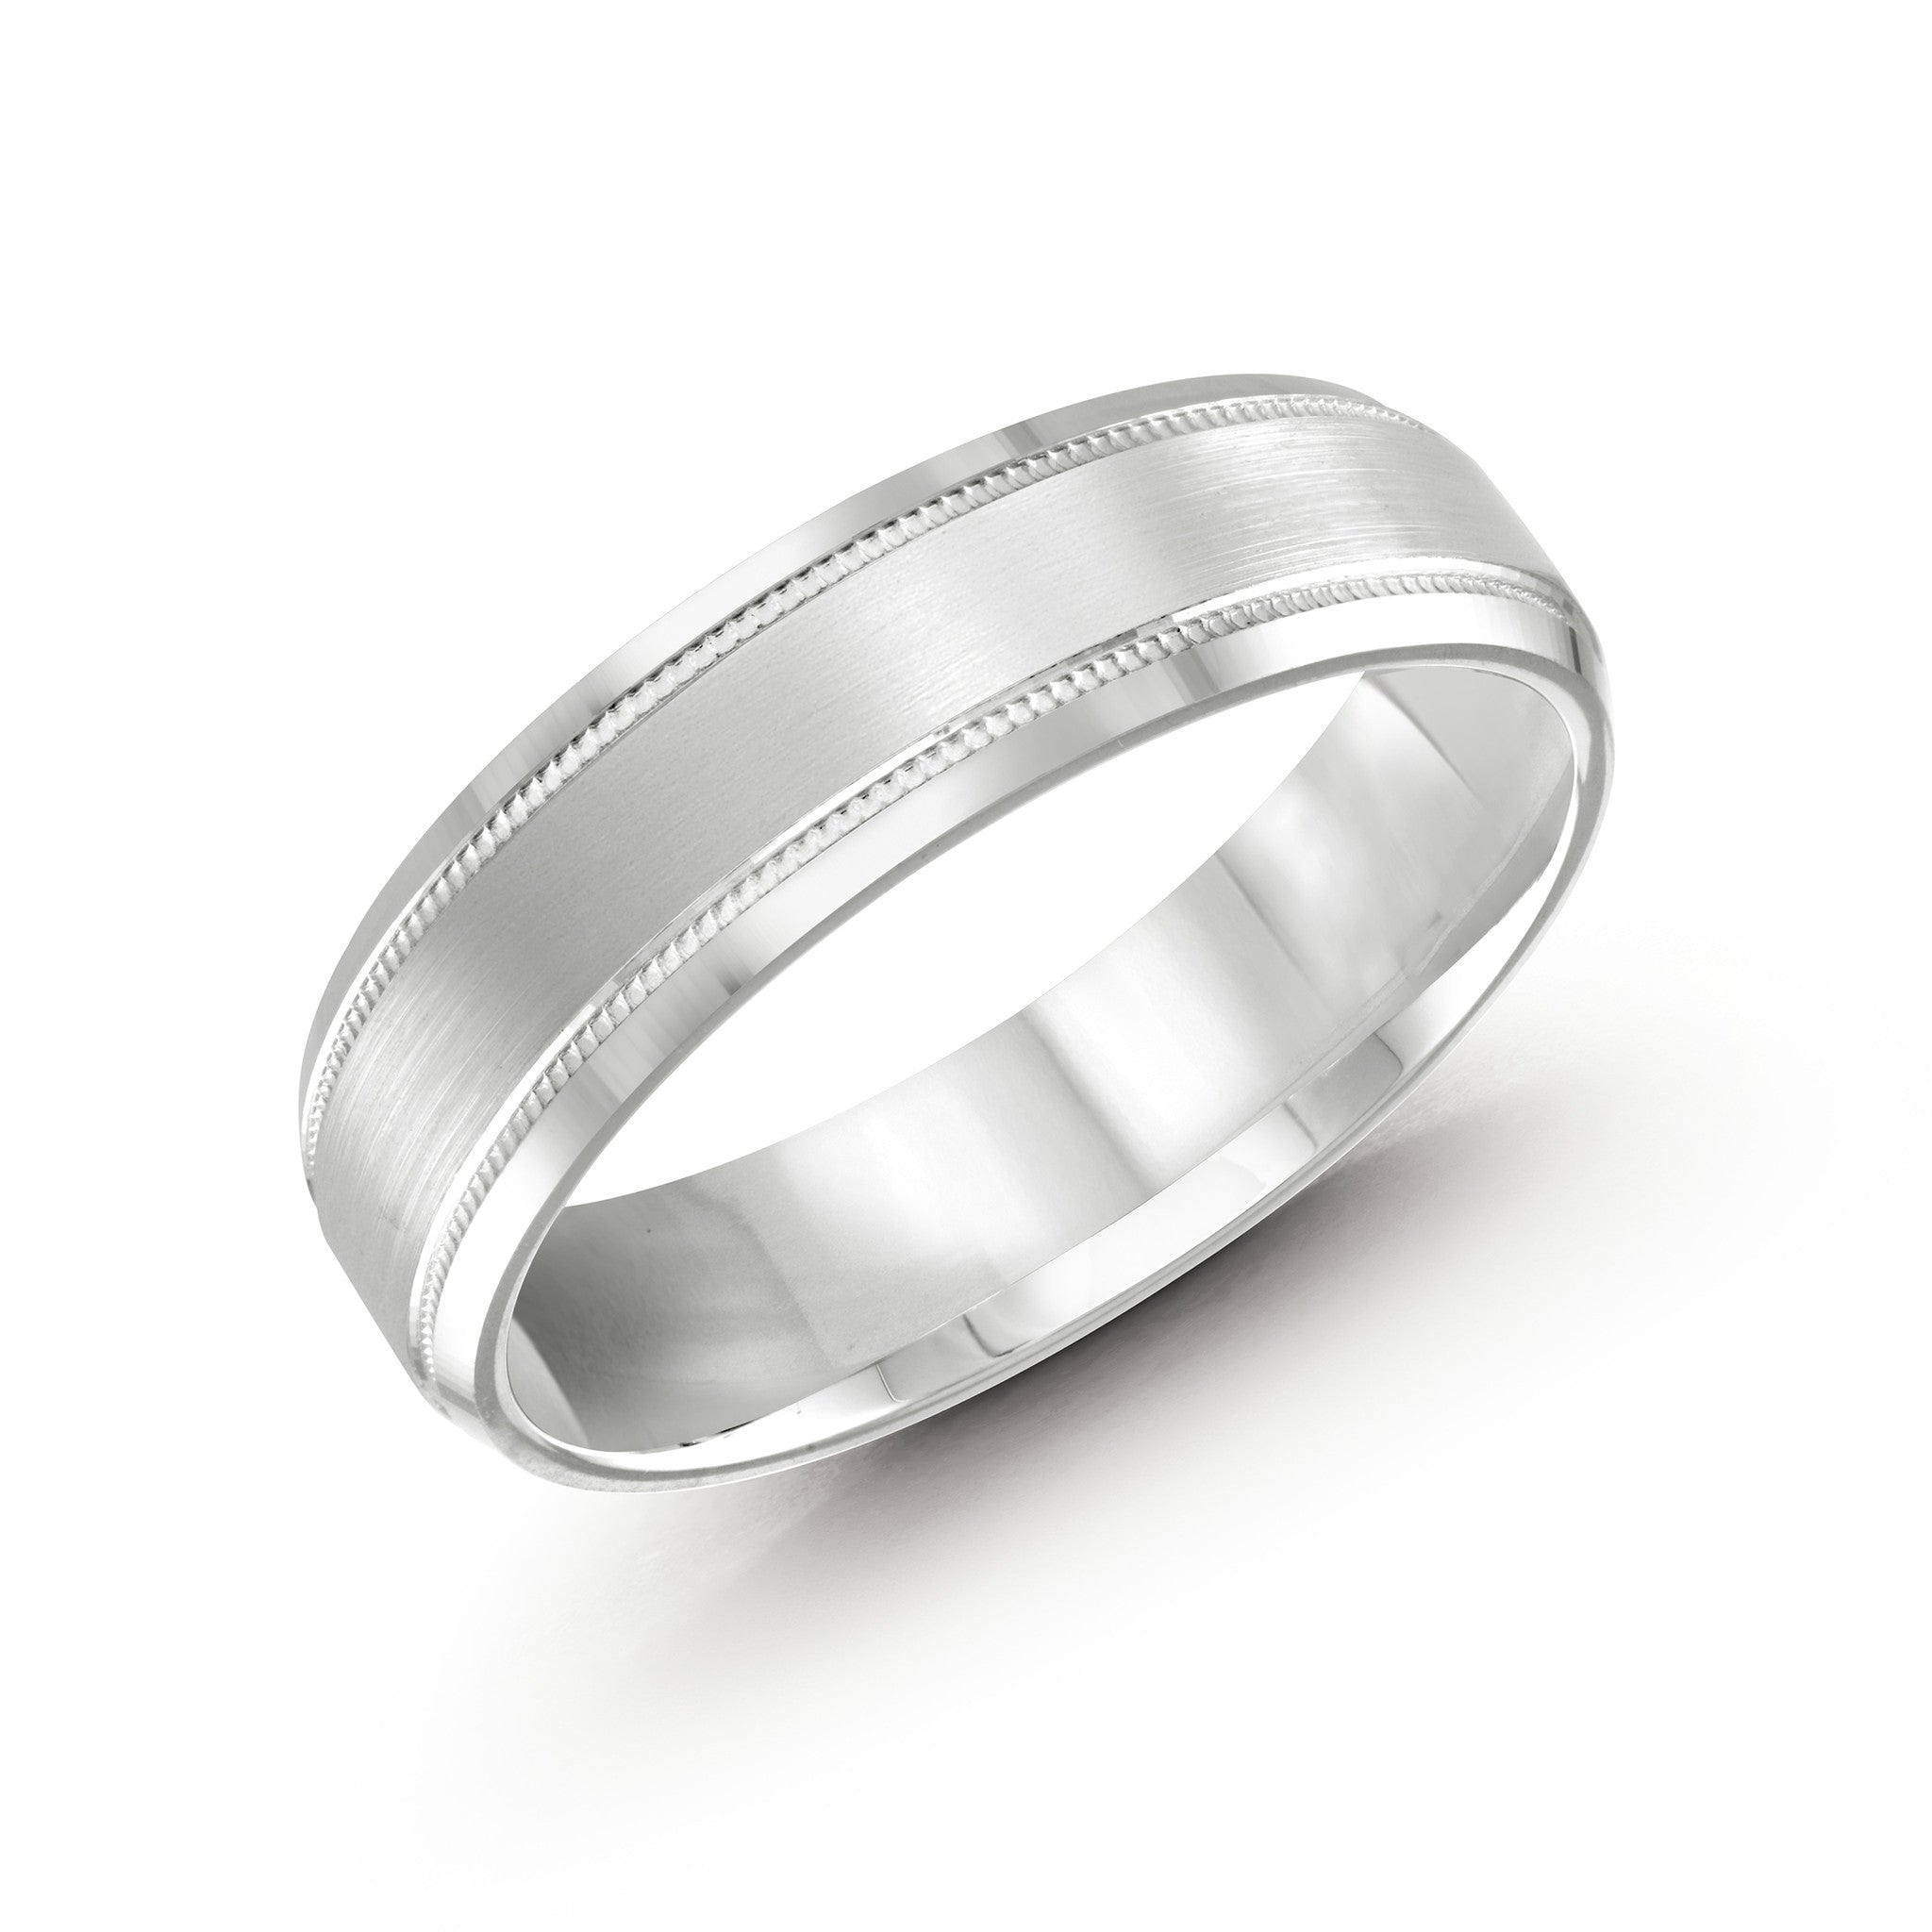 Women's Diamond Engagement Rings 14K White Gold Plated Sterling Silver  Moissanite Ring Twist Flower Wedding Band Diamond Jewelry - AliExpress